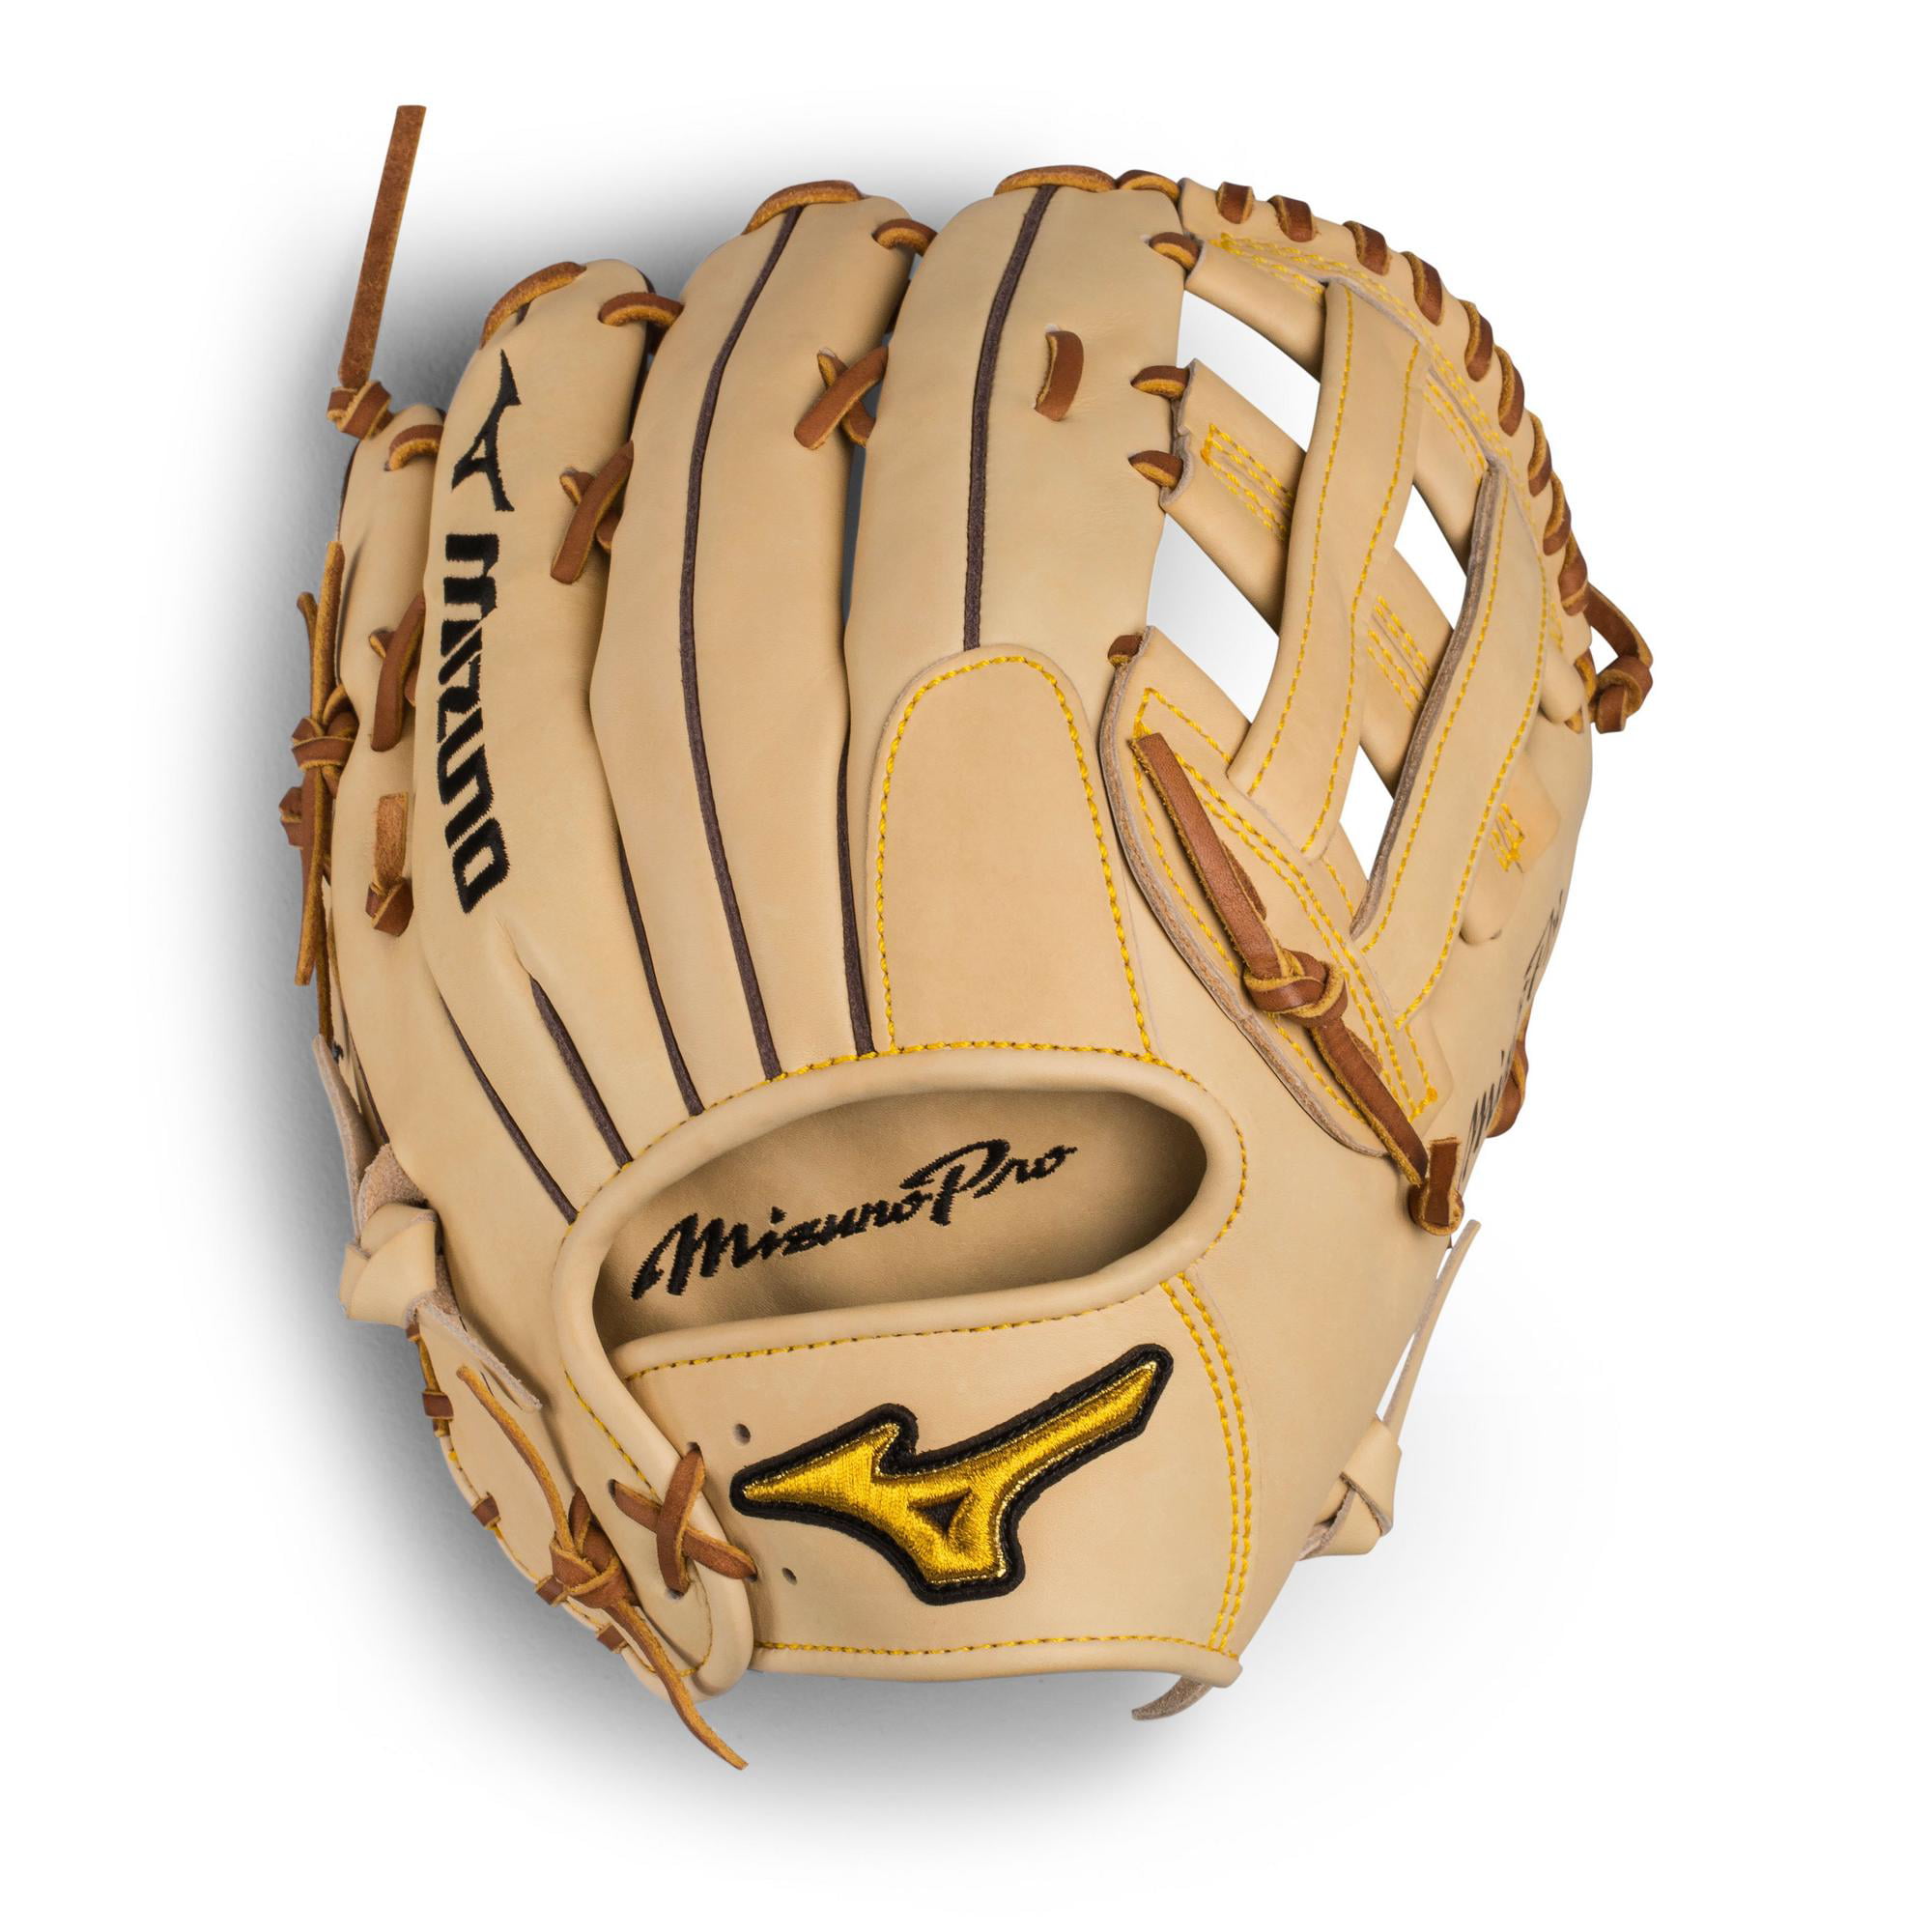 Mizuno Pro Outfield Baseball Glove 12.75" - Deep Pocket, Right Hand Throw